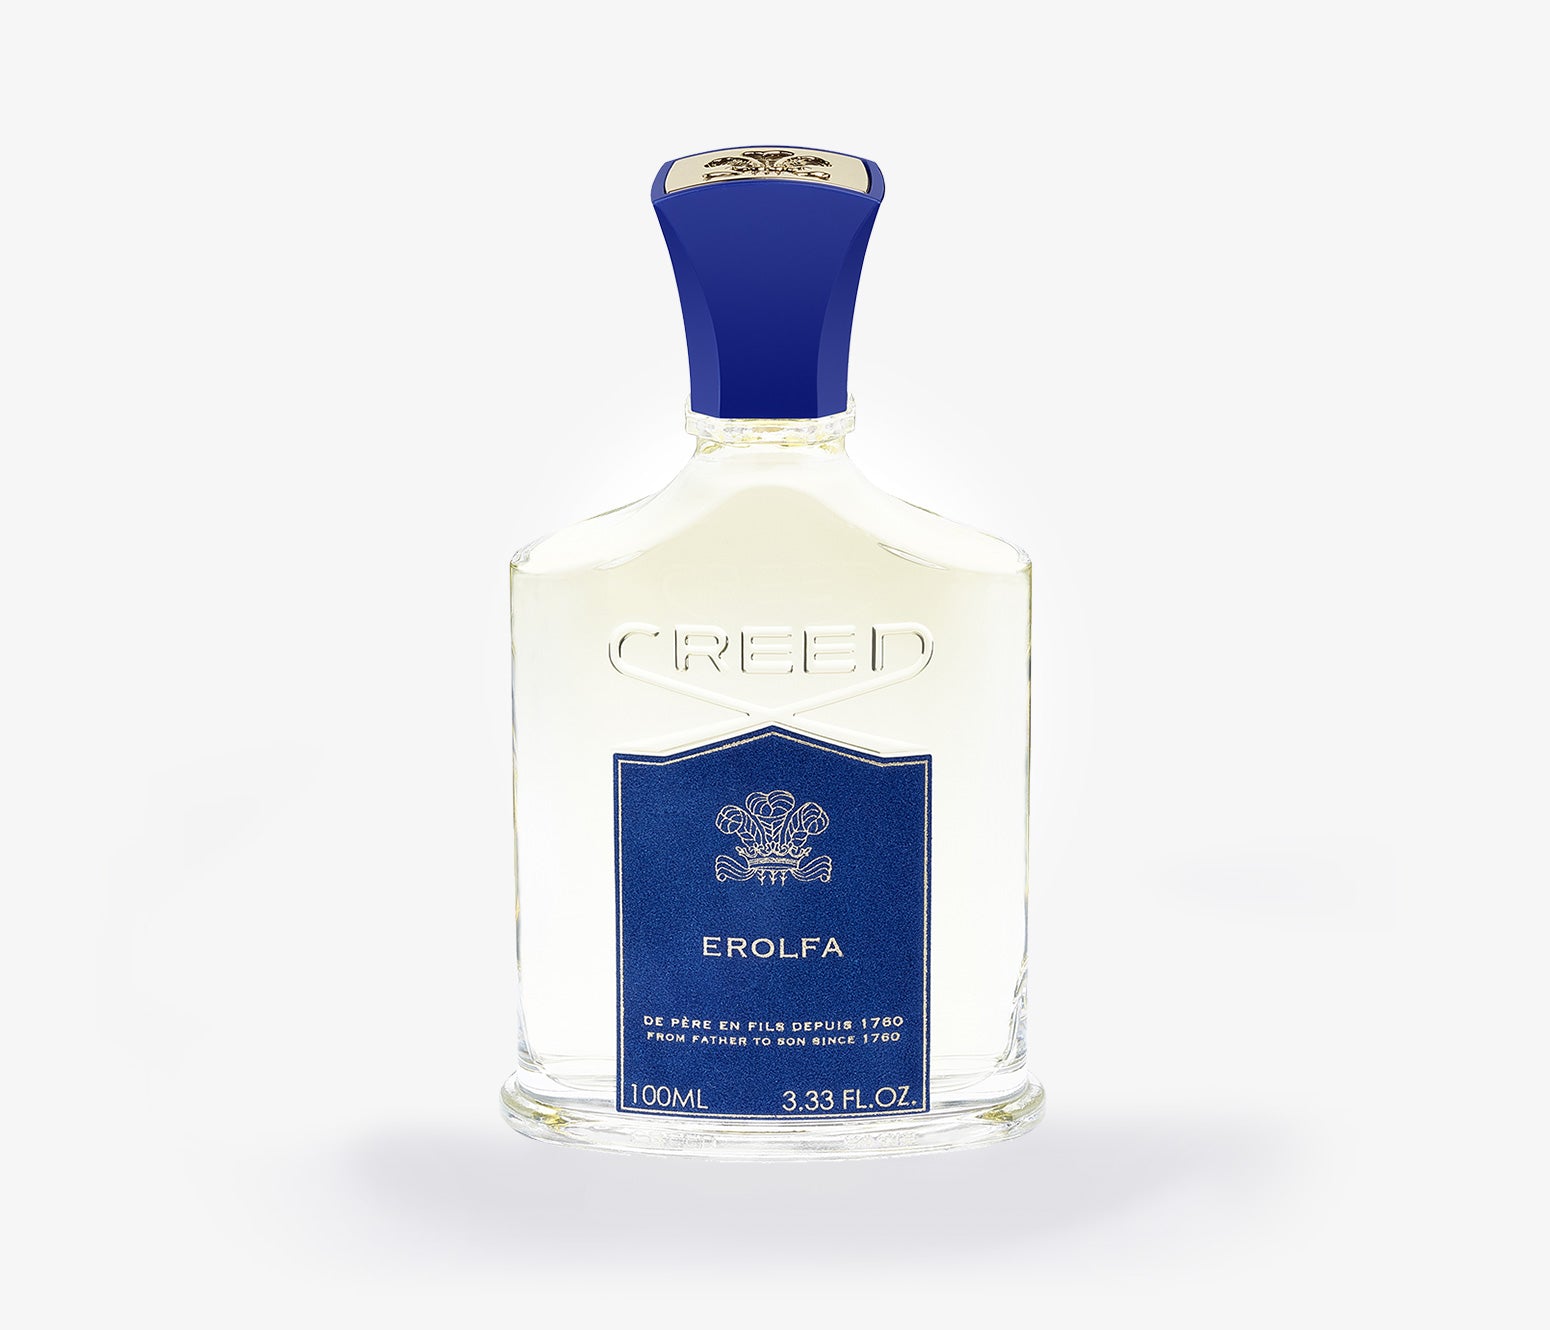 Creed - Erolfa - 100ml - '10000529 - Product Image - Fragrance - Les Senteurs